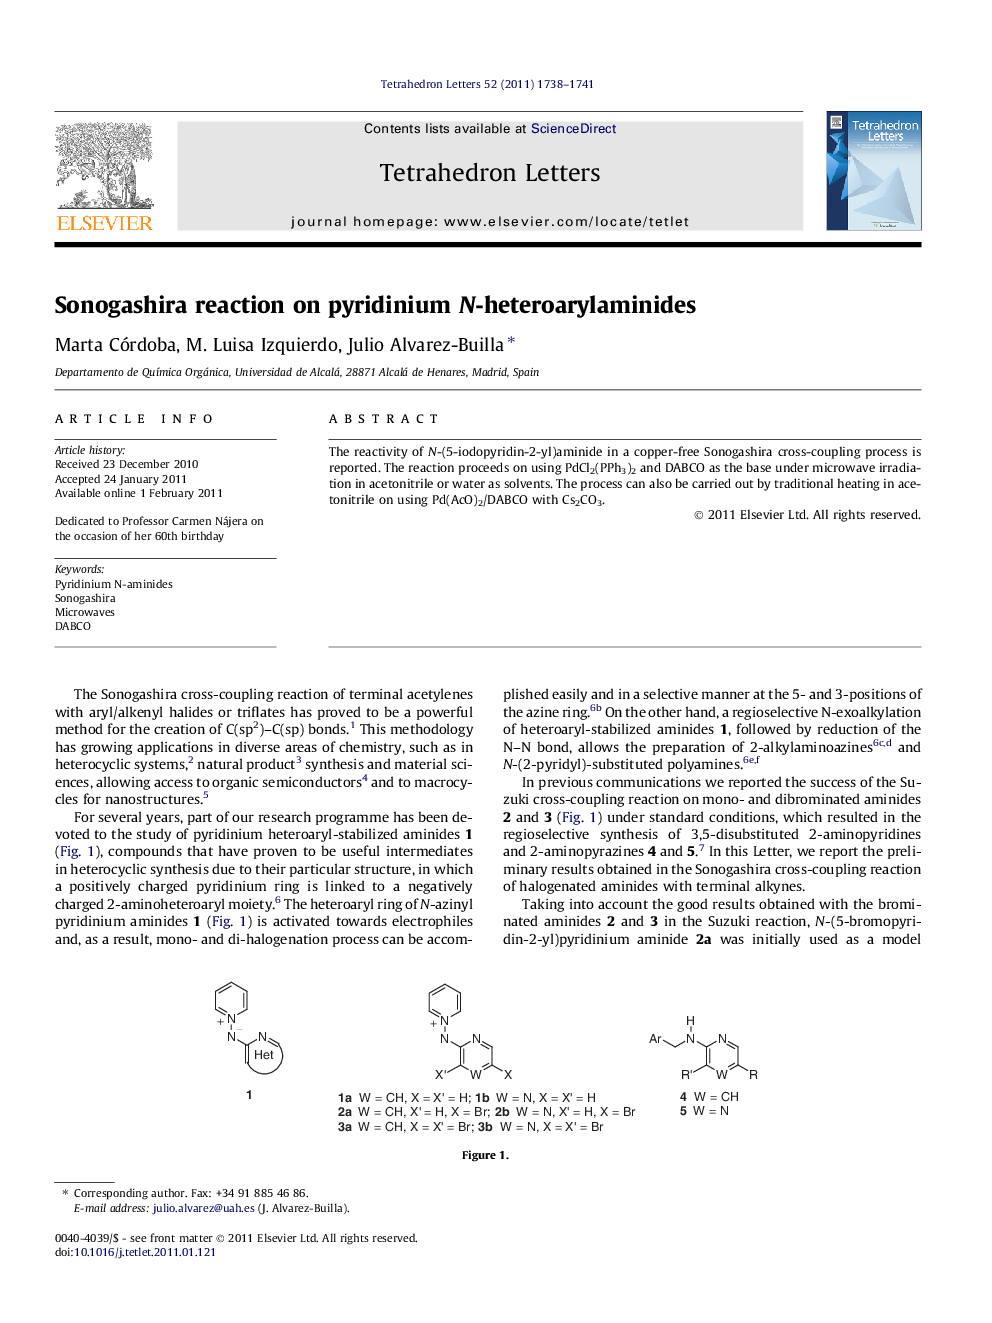 Sonogashira reaction on pyridinium N-heteroarylaminides